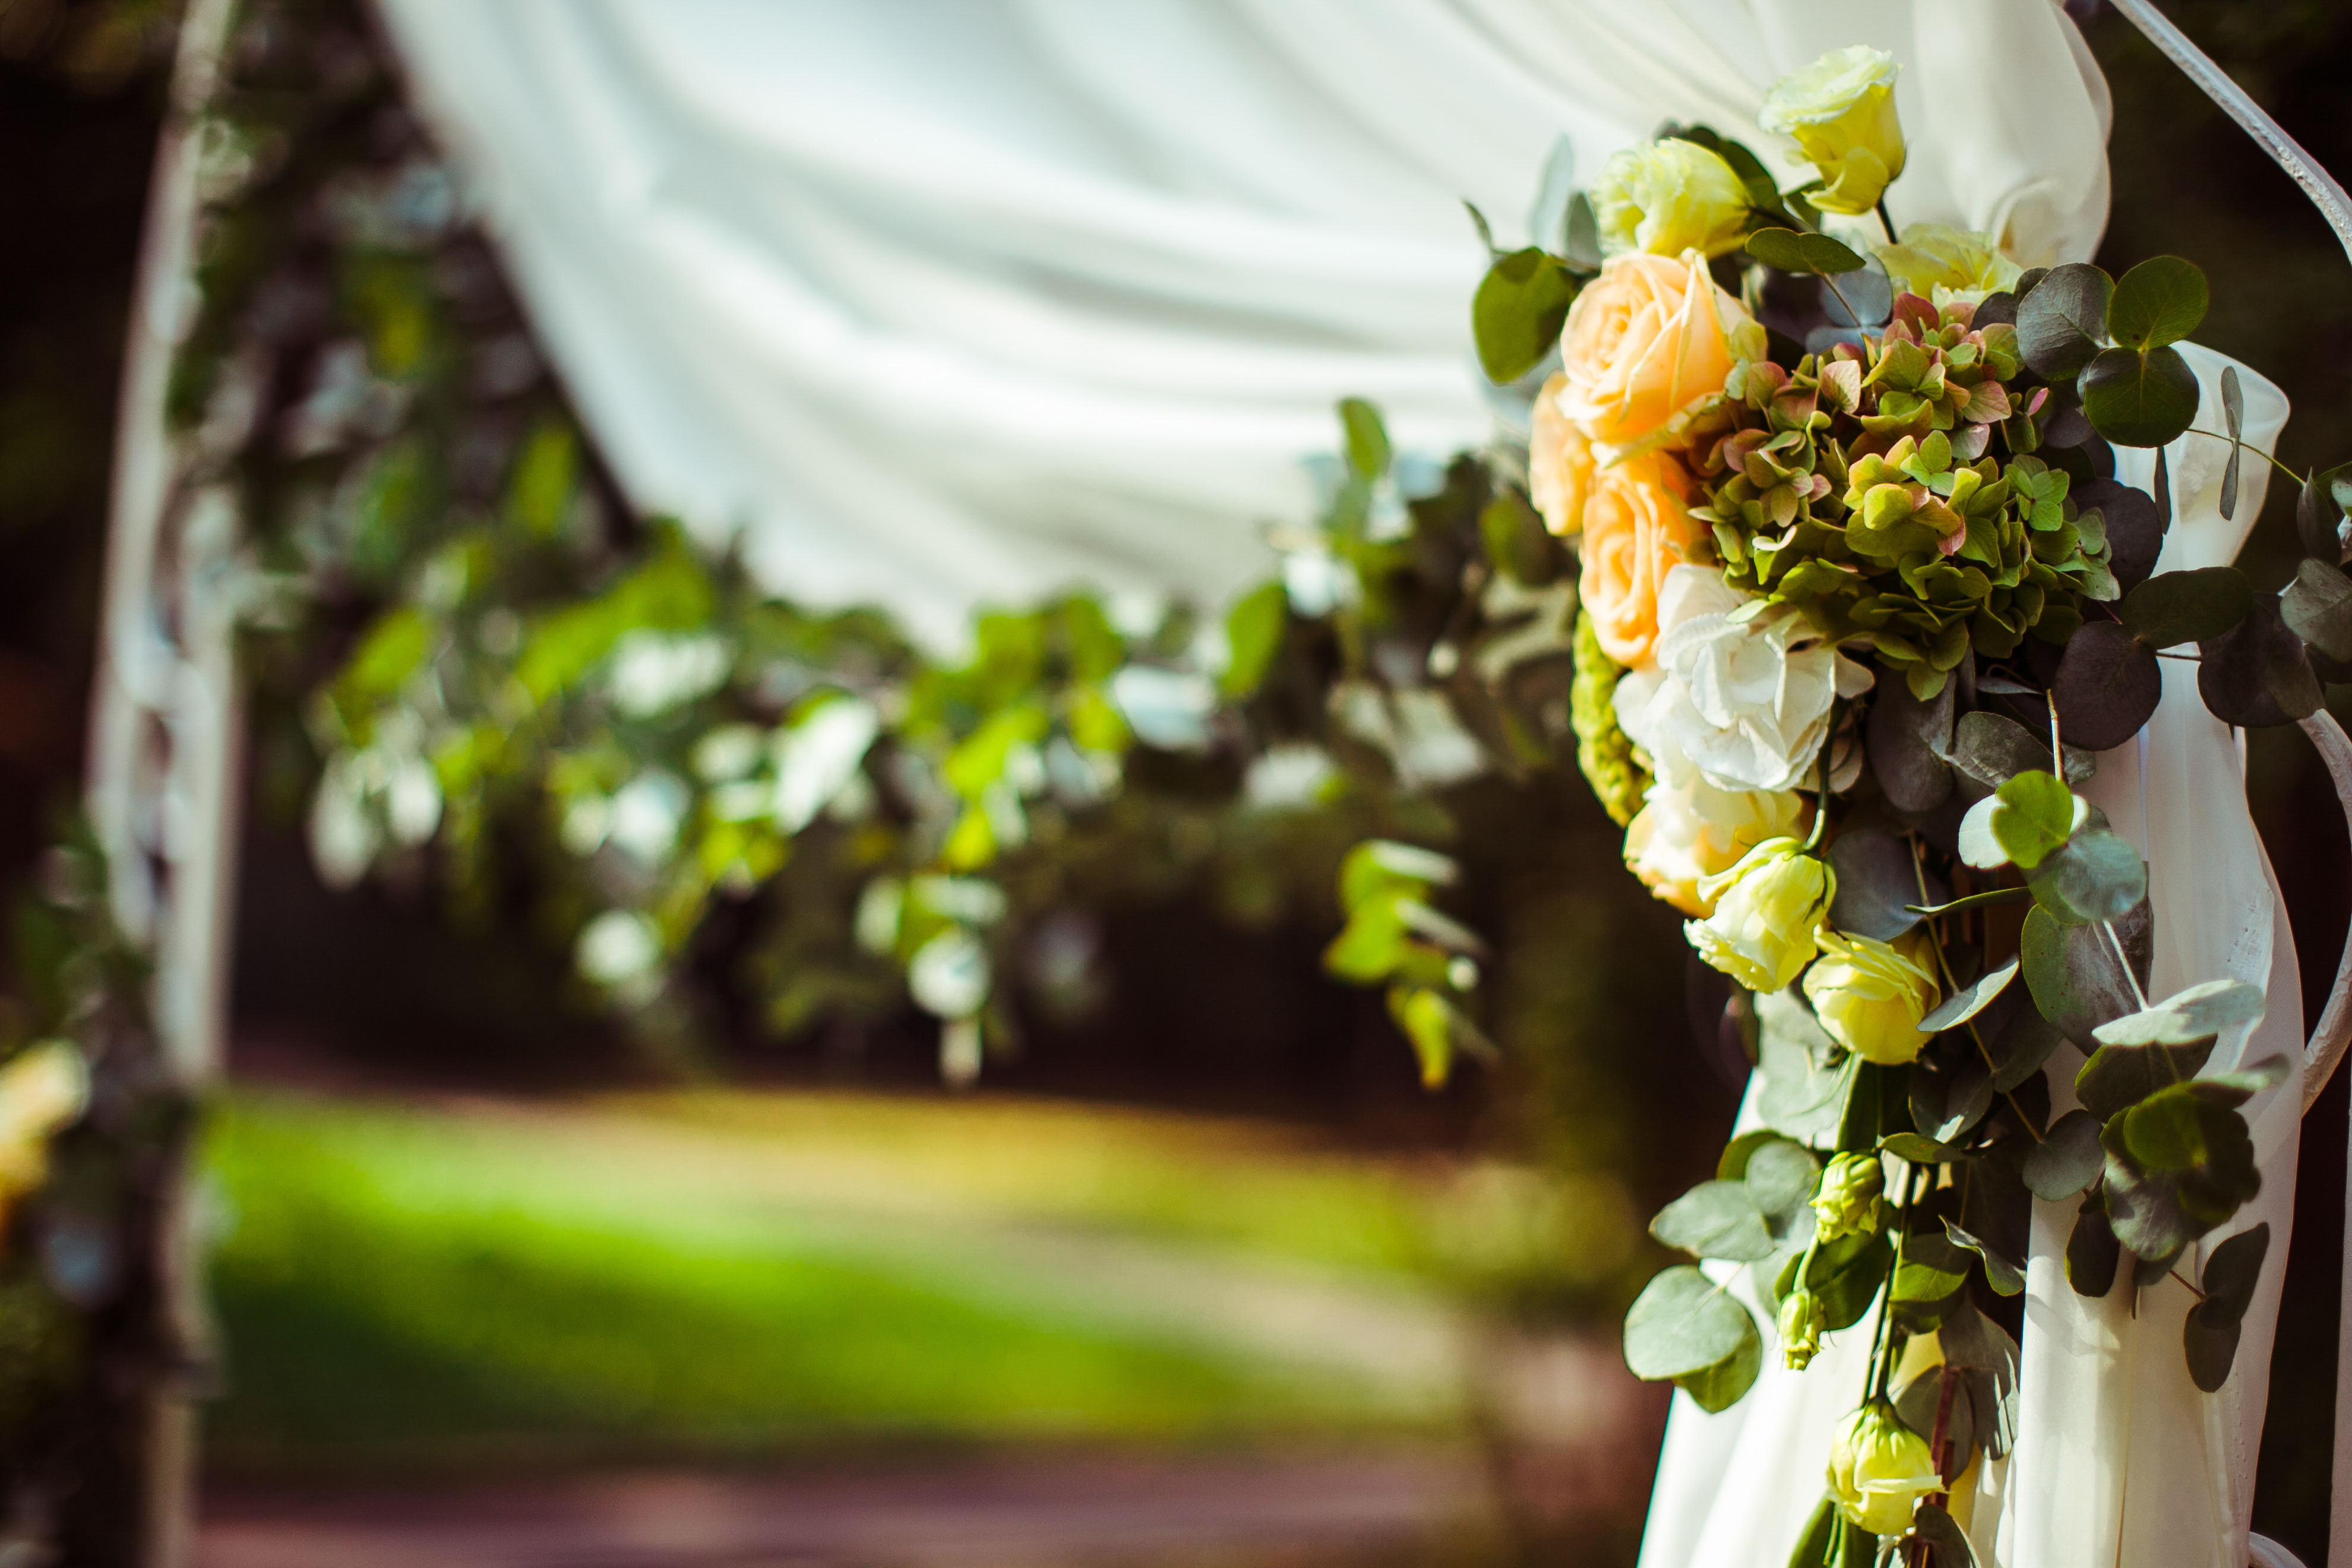 Flower decorations at a wedding altar | Source: Shutterstock